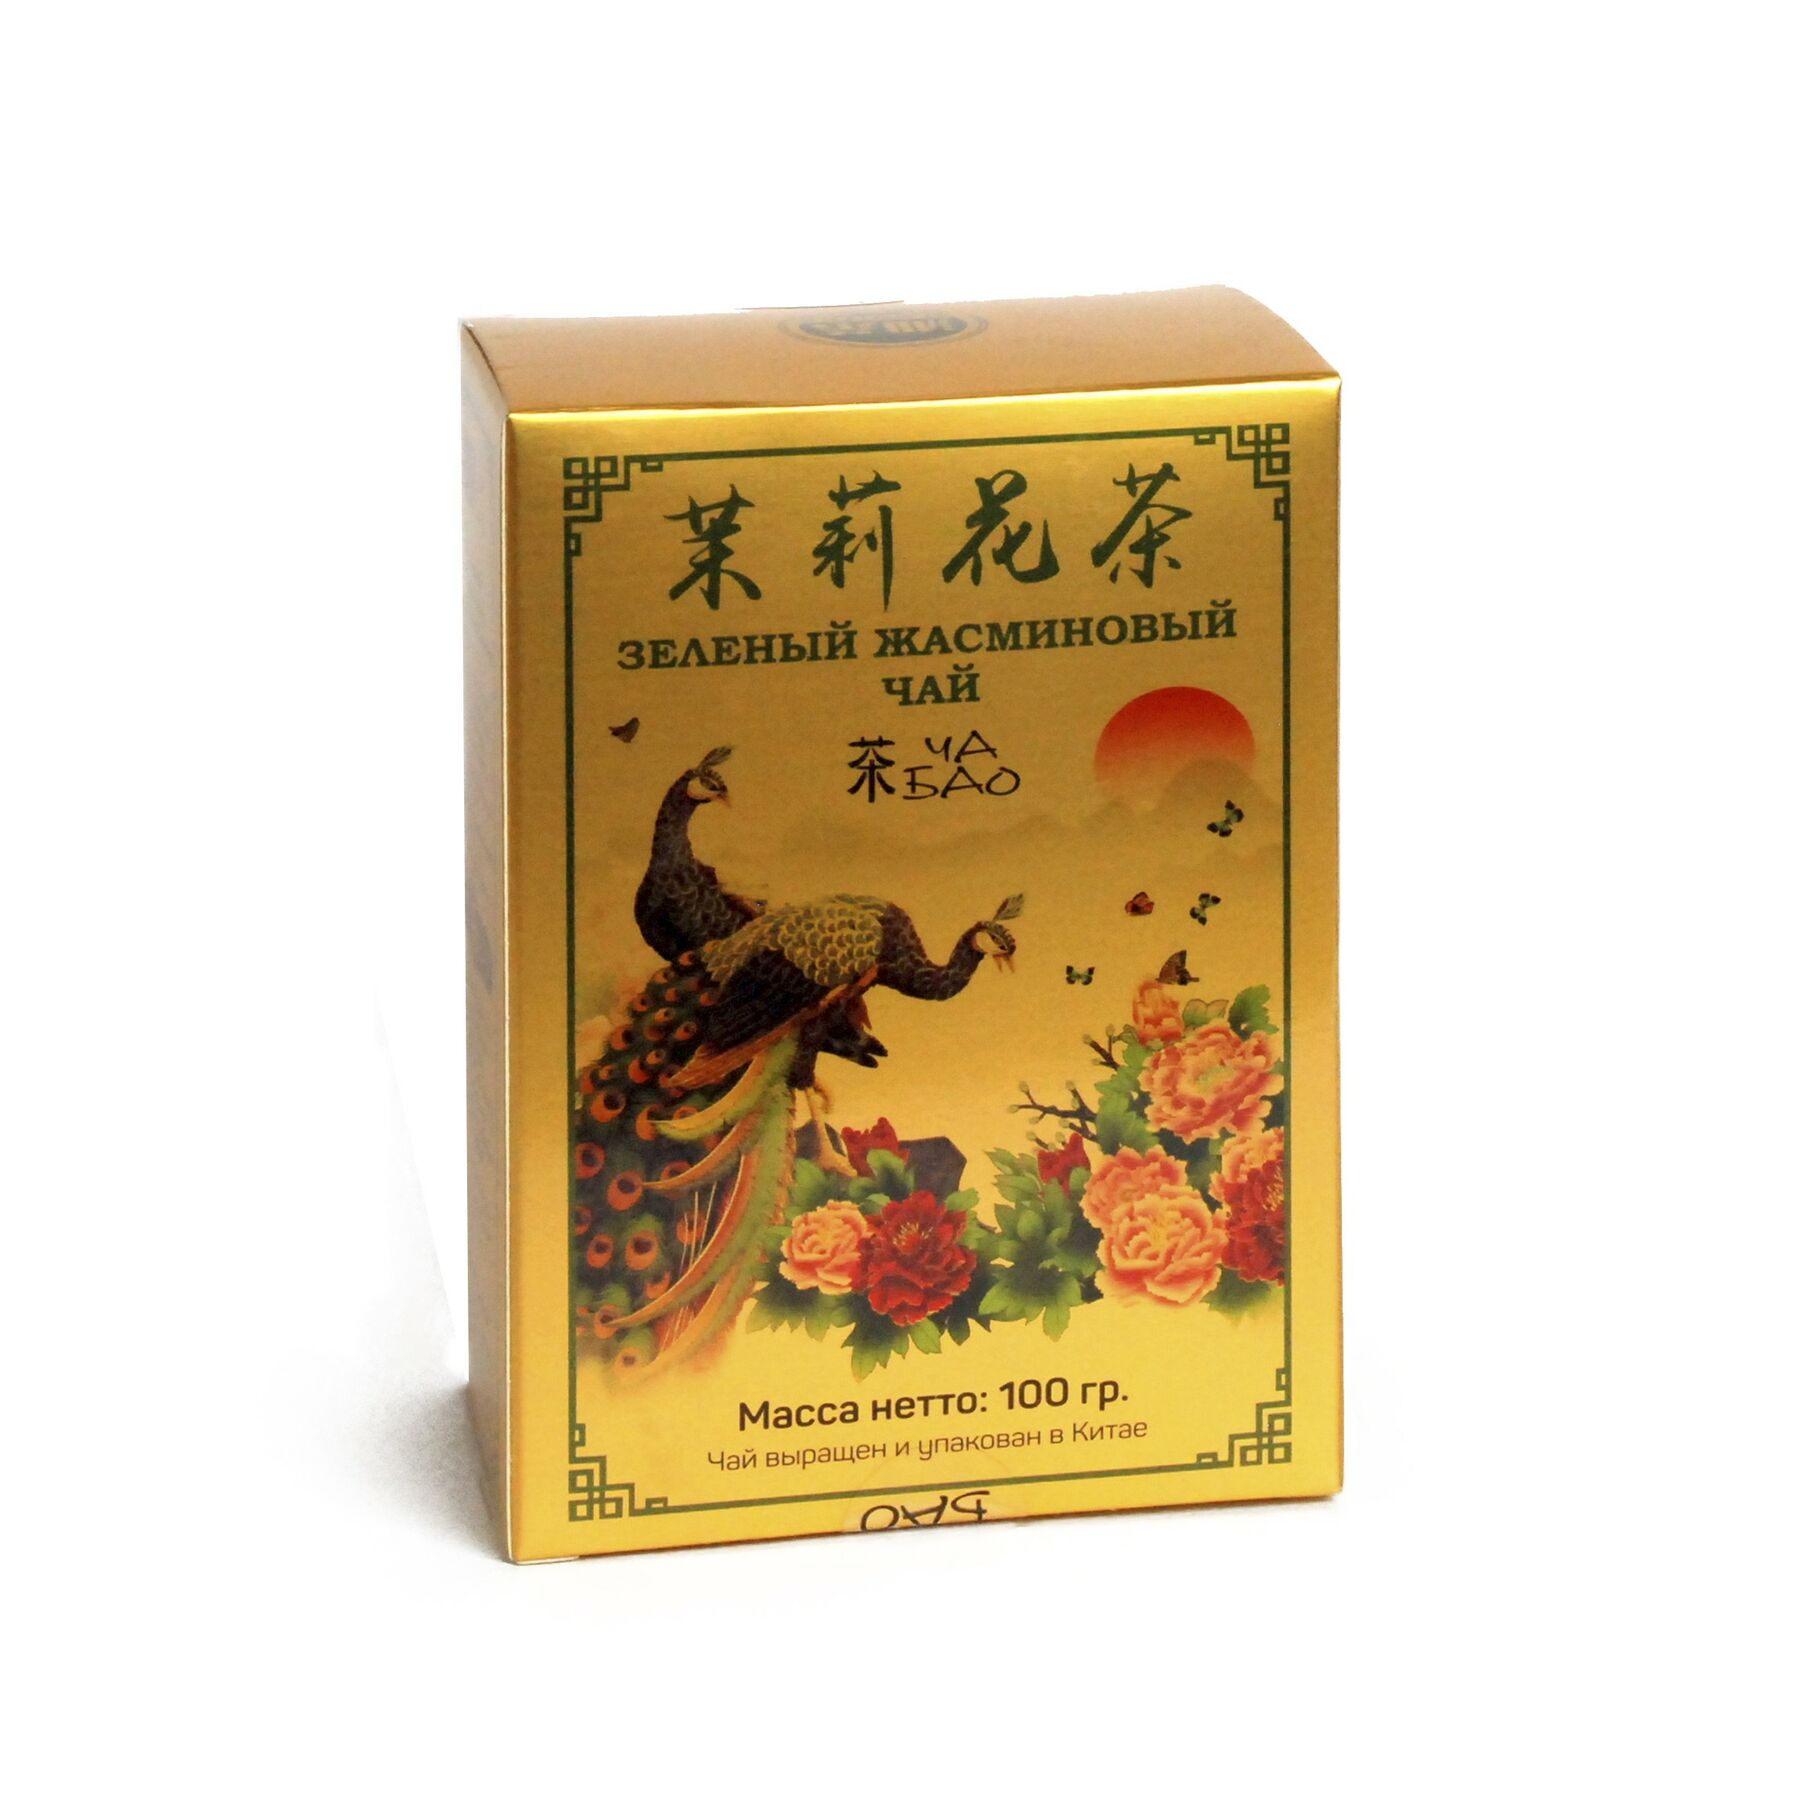 Чай "Ча Бао" Зеленый - Жасминовый, 100 гр.